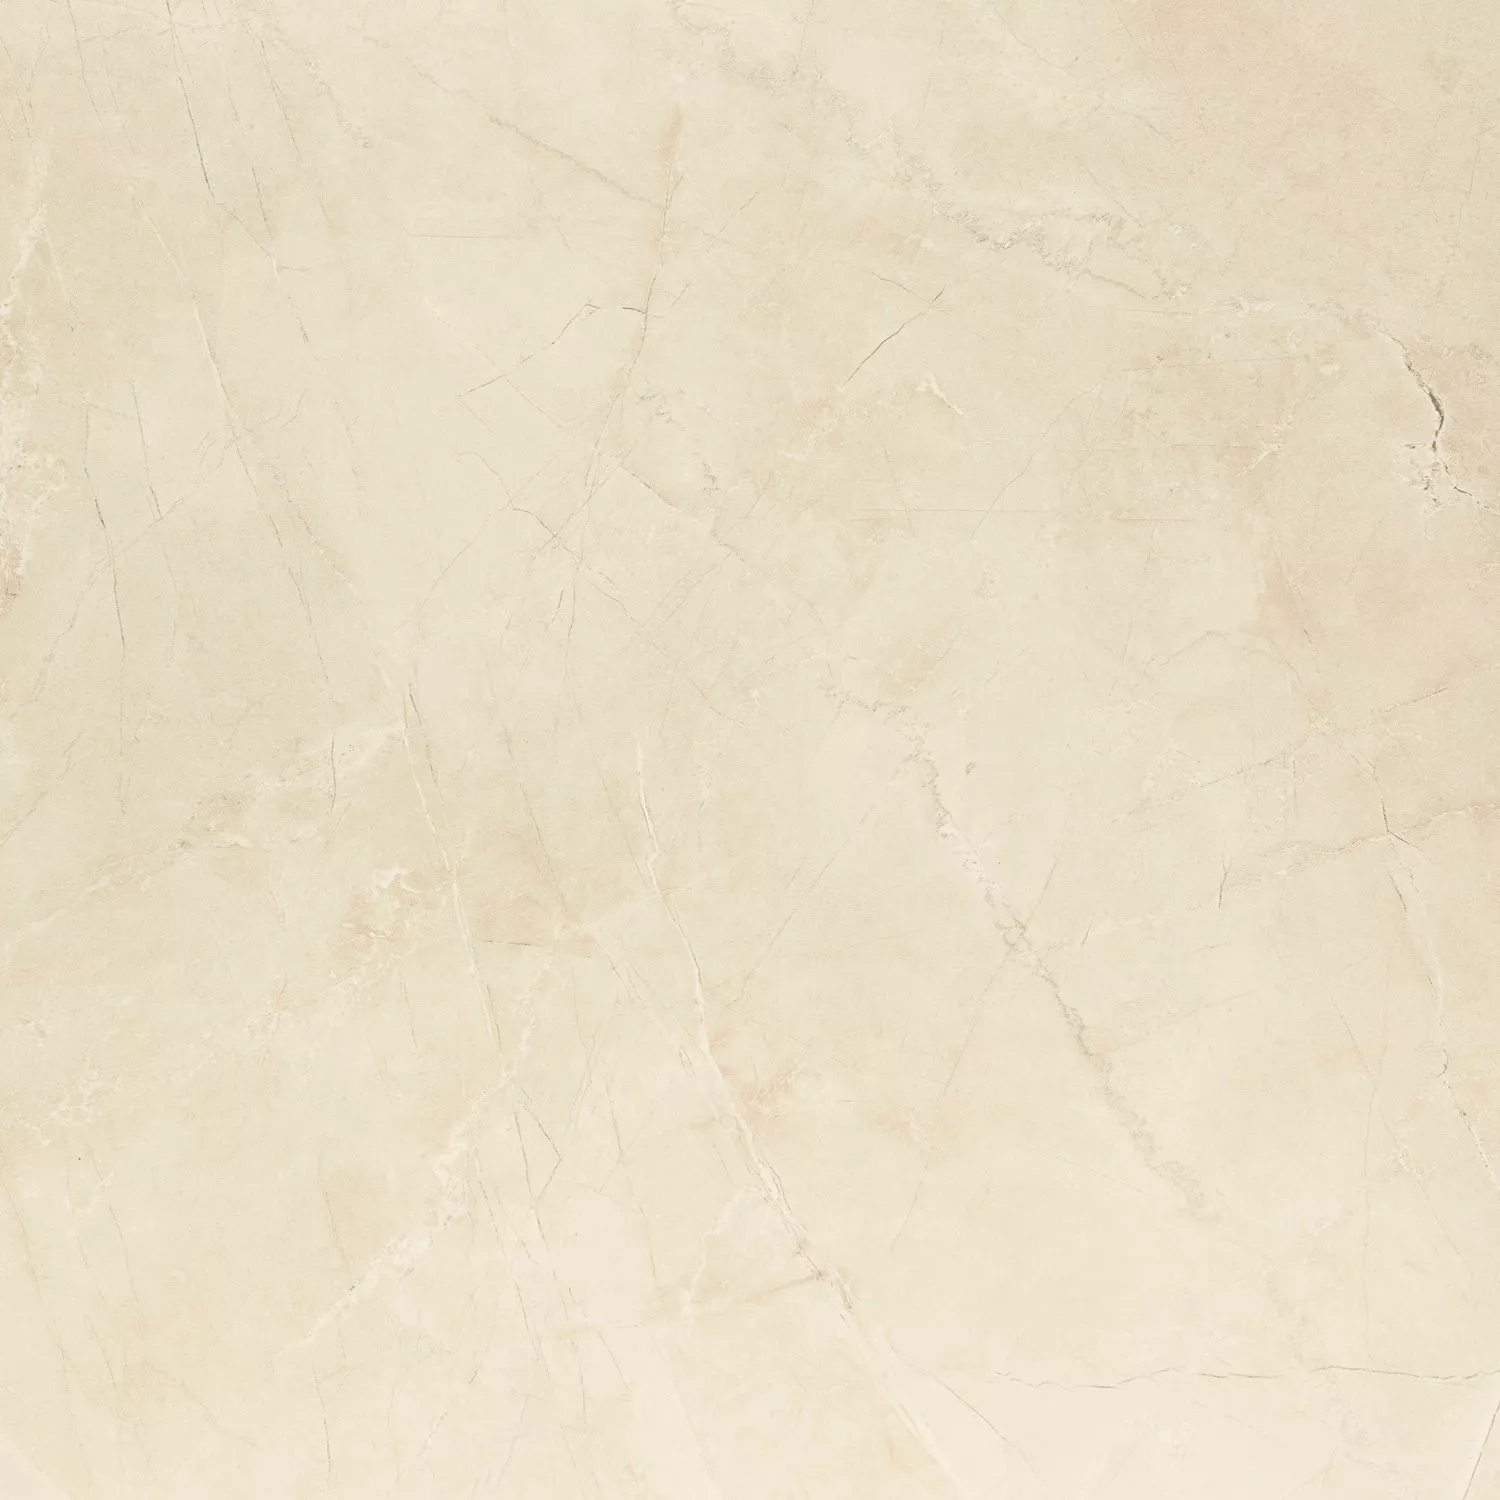 Podlahové Dlaždice Mramorový Vzhled Imperial Béžová 80x80cm